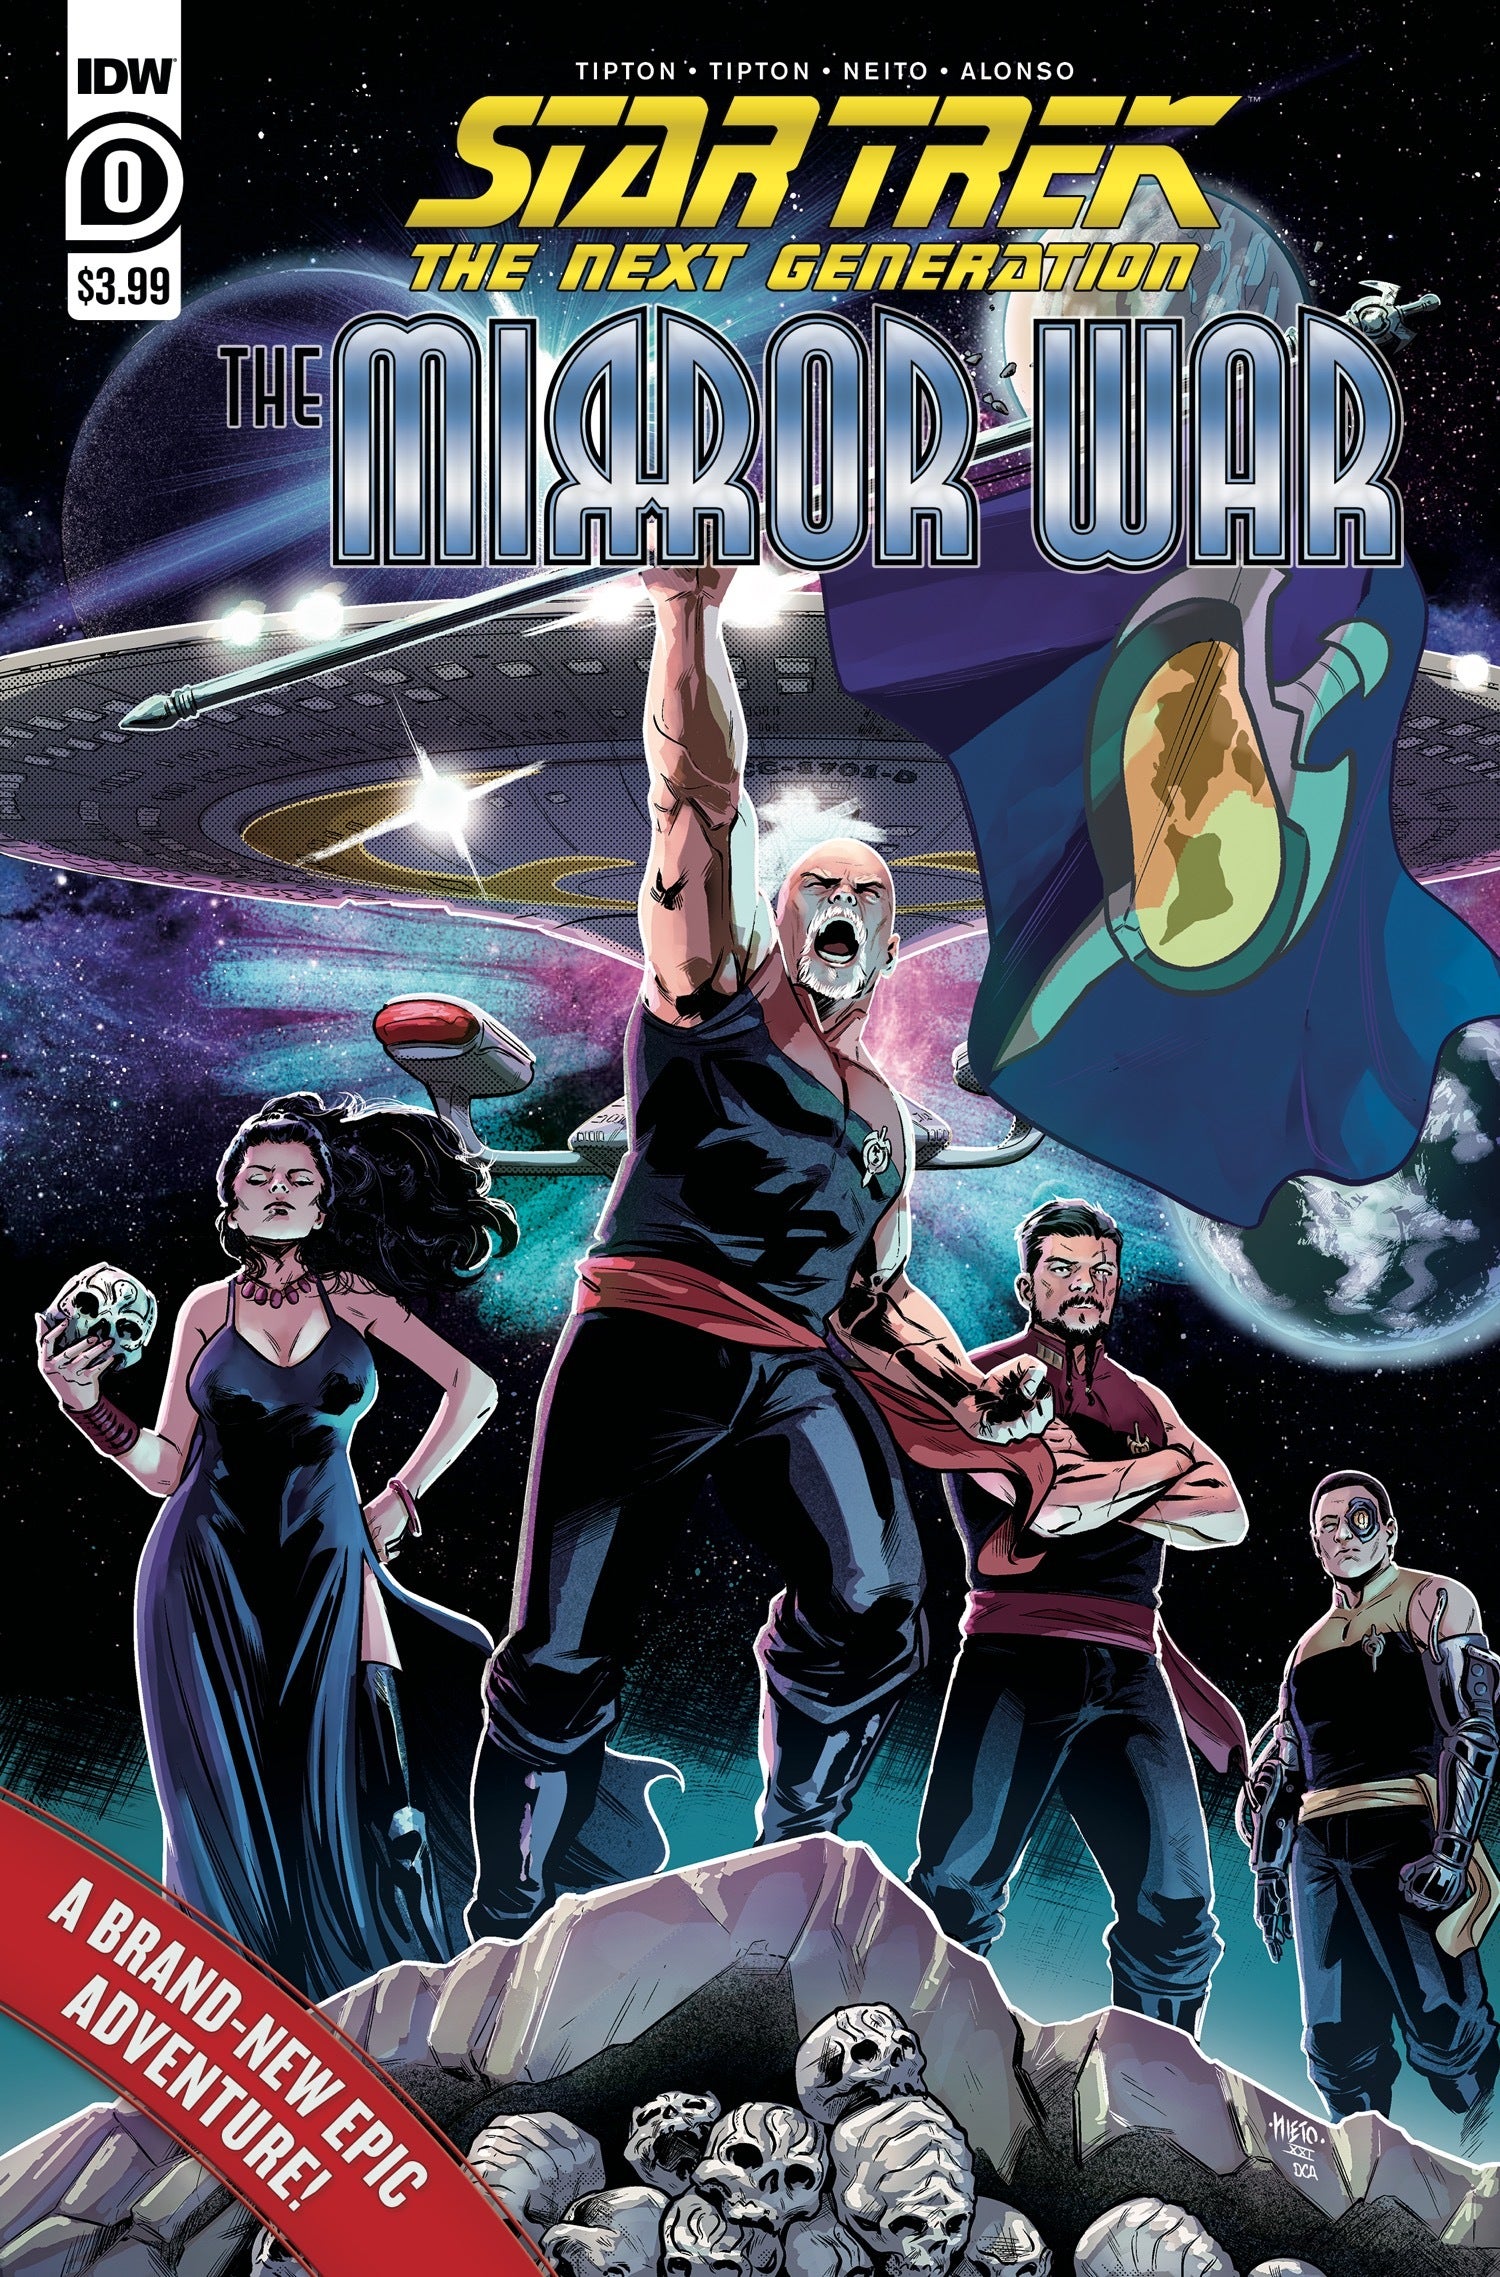 A New Star Trek Comic Series Sees Evil Picard Waging the ‘Mirror War’